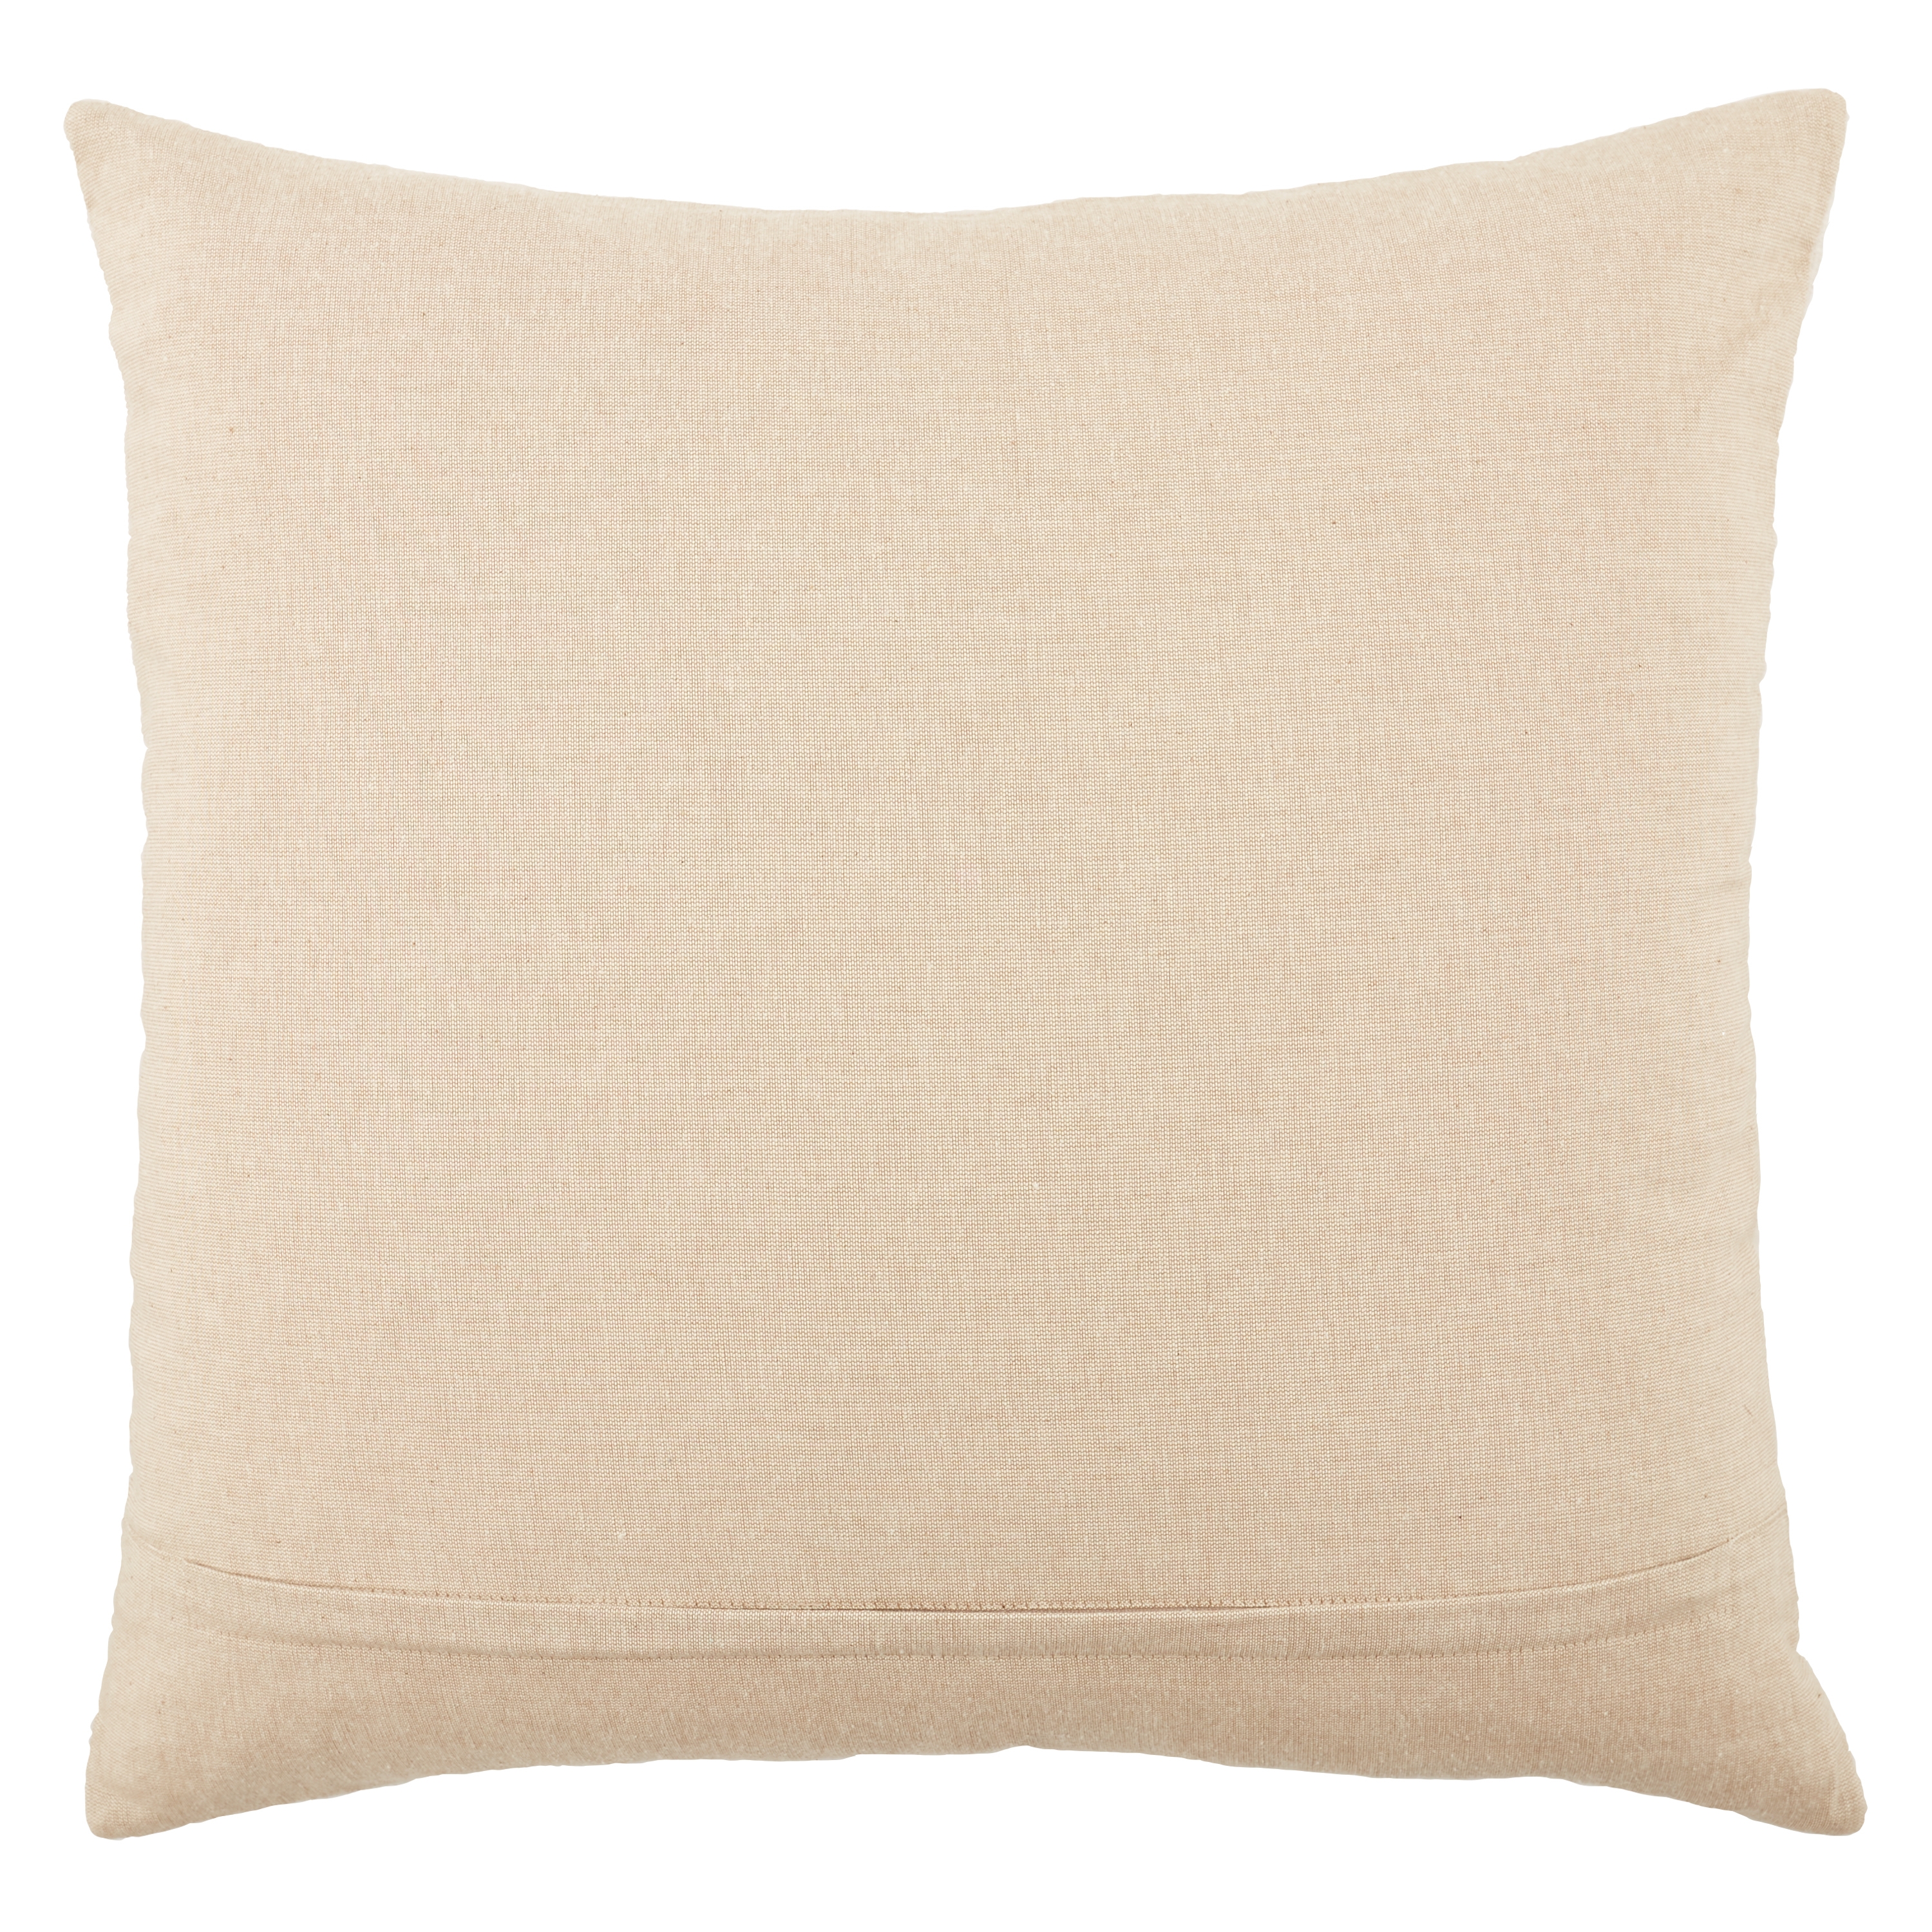 Deco Throw Pillow, Ivory, 22" x 22" - Image 1